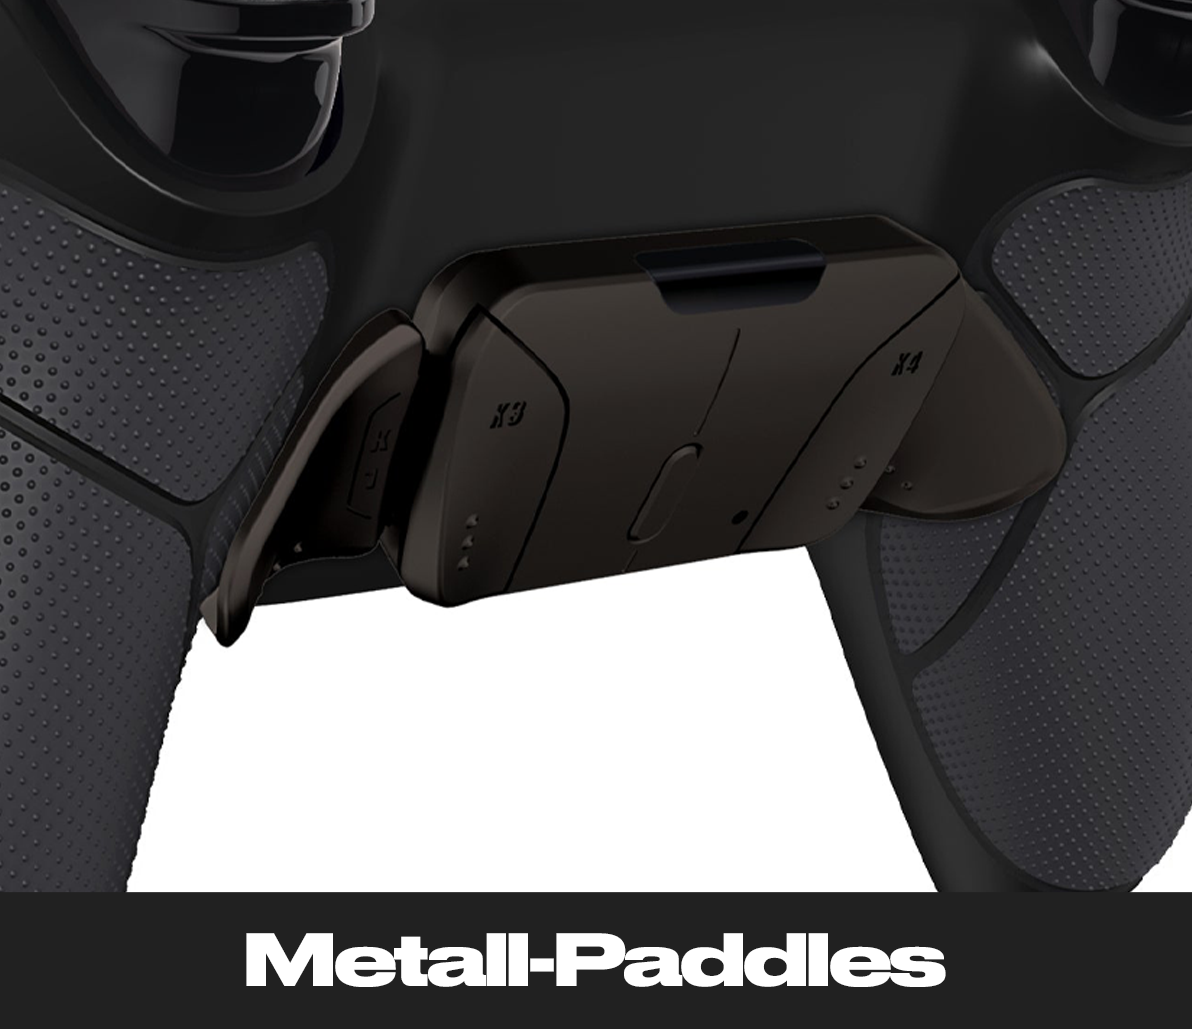 PS5 Custom Controller 'Jade-Drache'